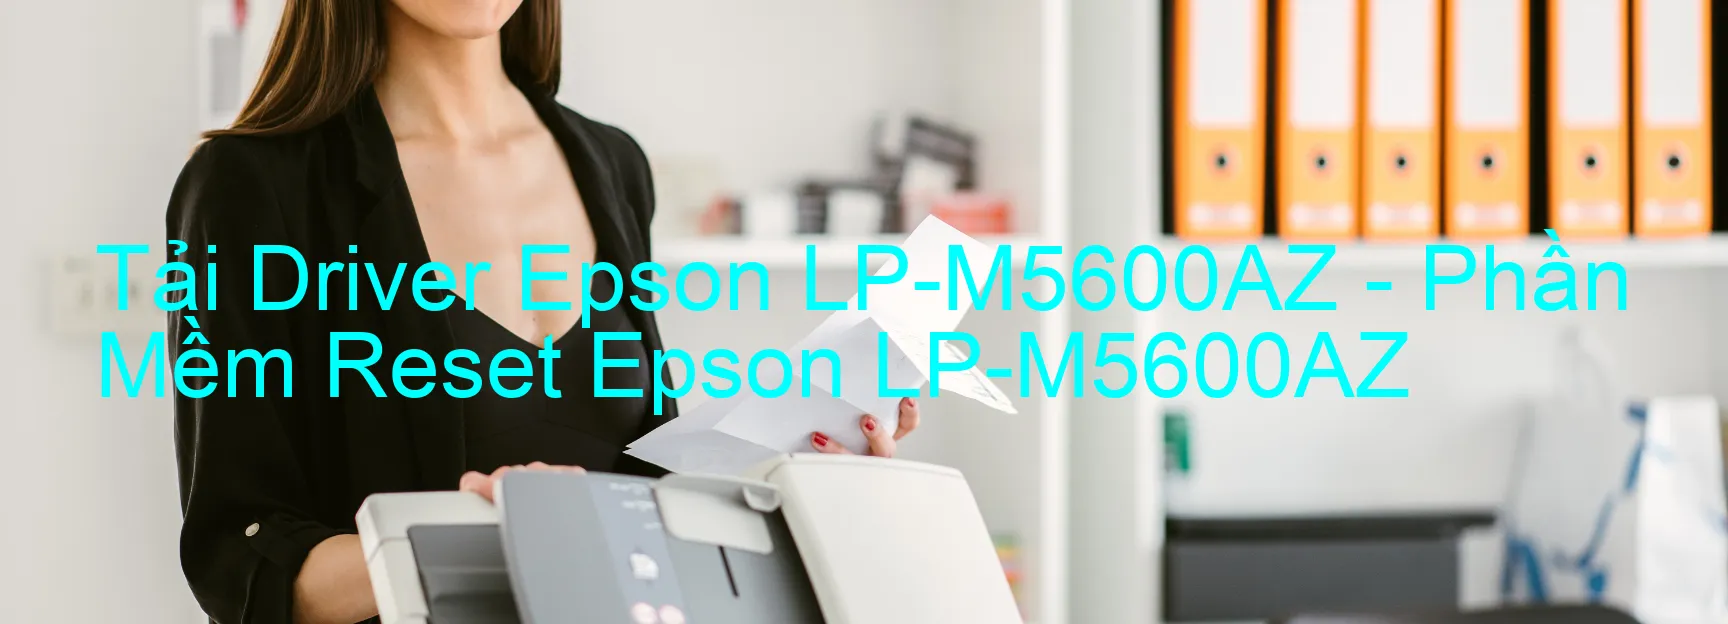 Driver Epson LP-M5600AZ, Phần Mềm Reset Epson LP-M5600AZ